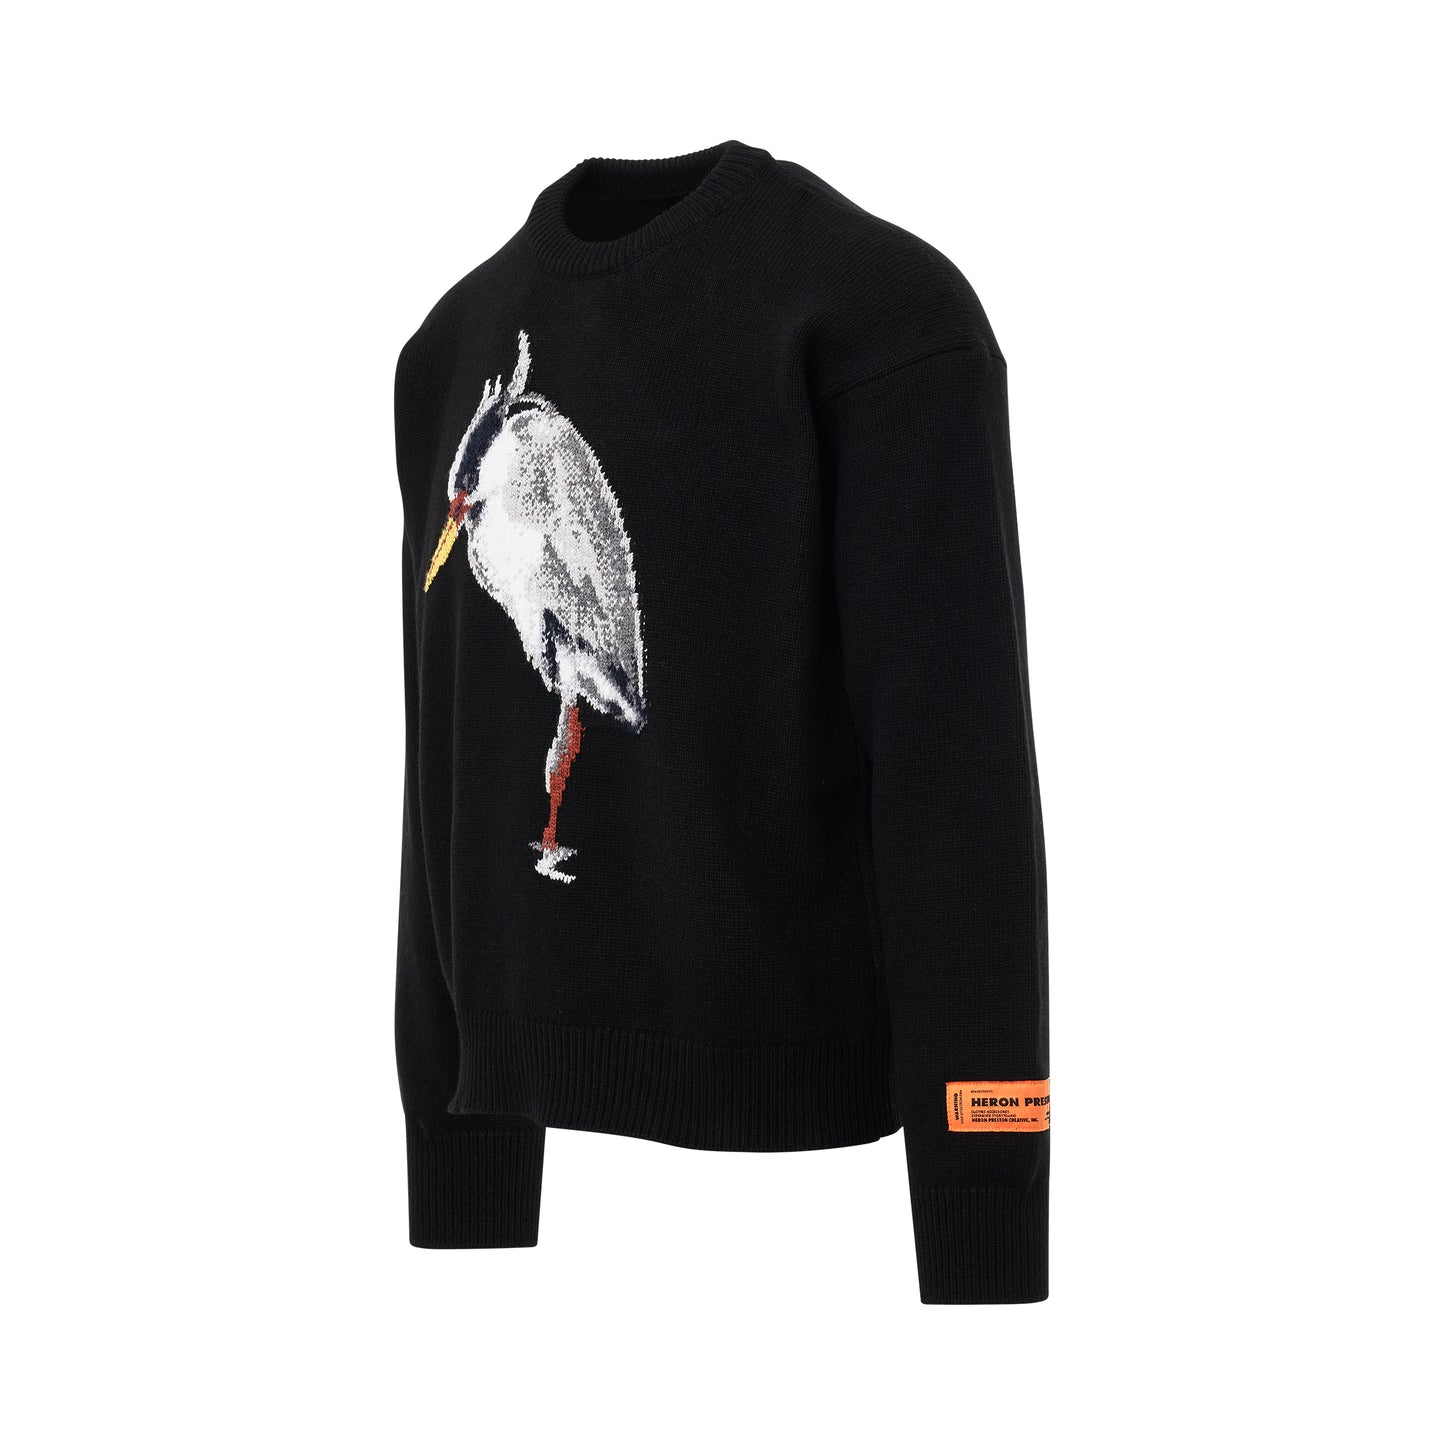 Heron Bird Knit Crewneck in Black/Grey